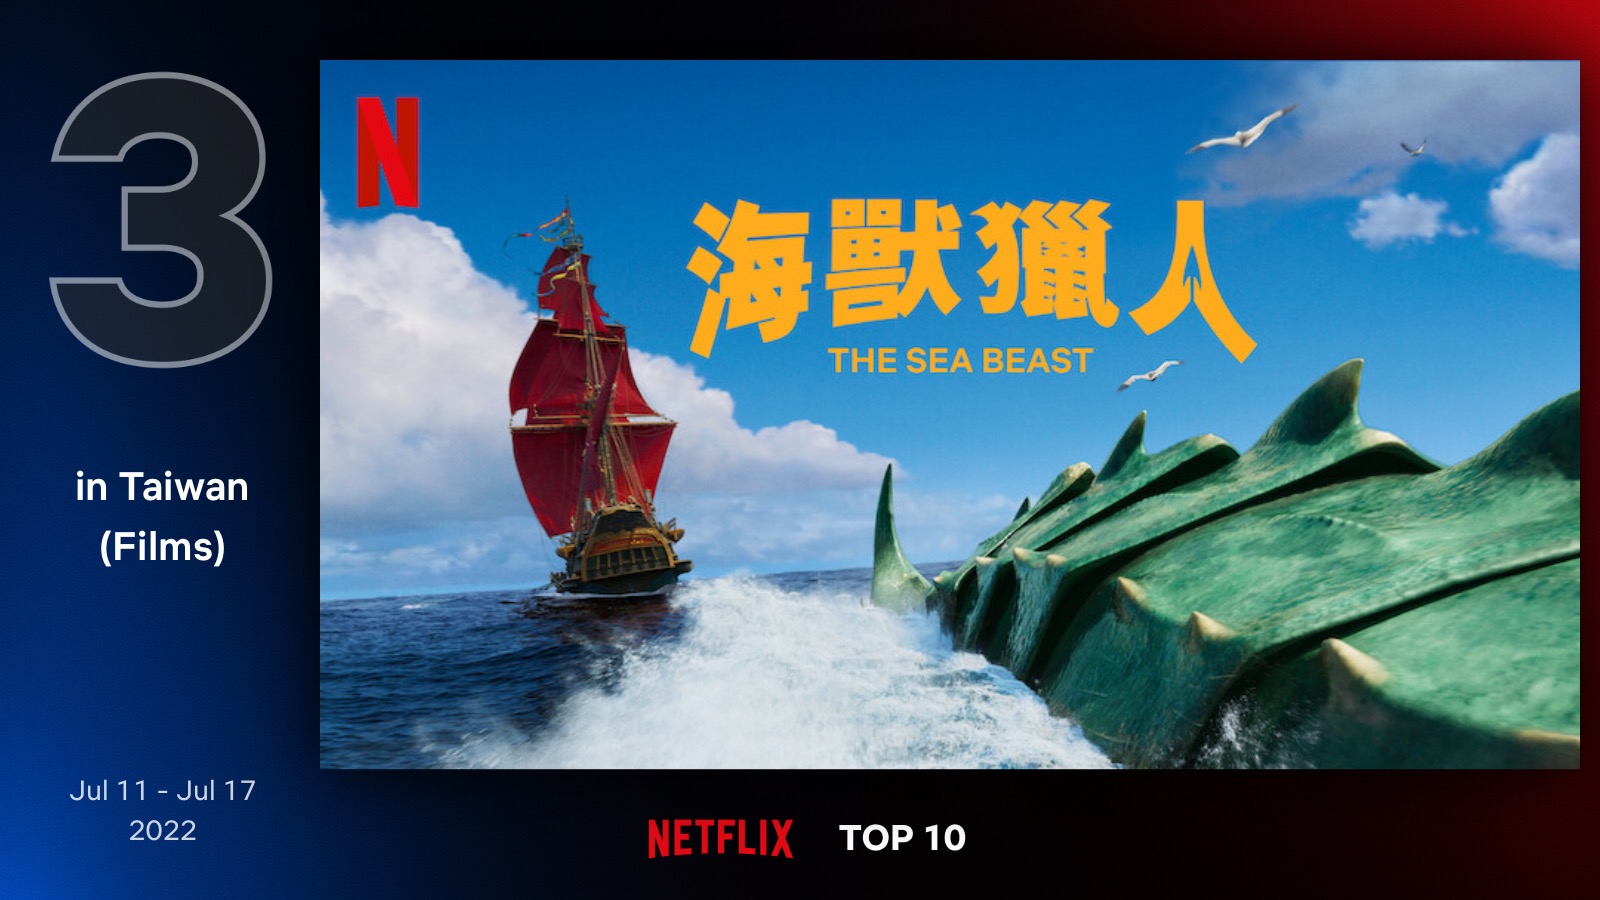 Netflix 台灣電影 排行榜 7/11-7/17